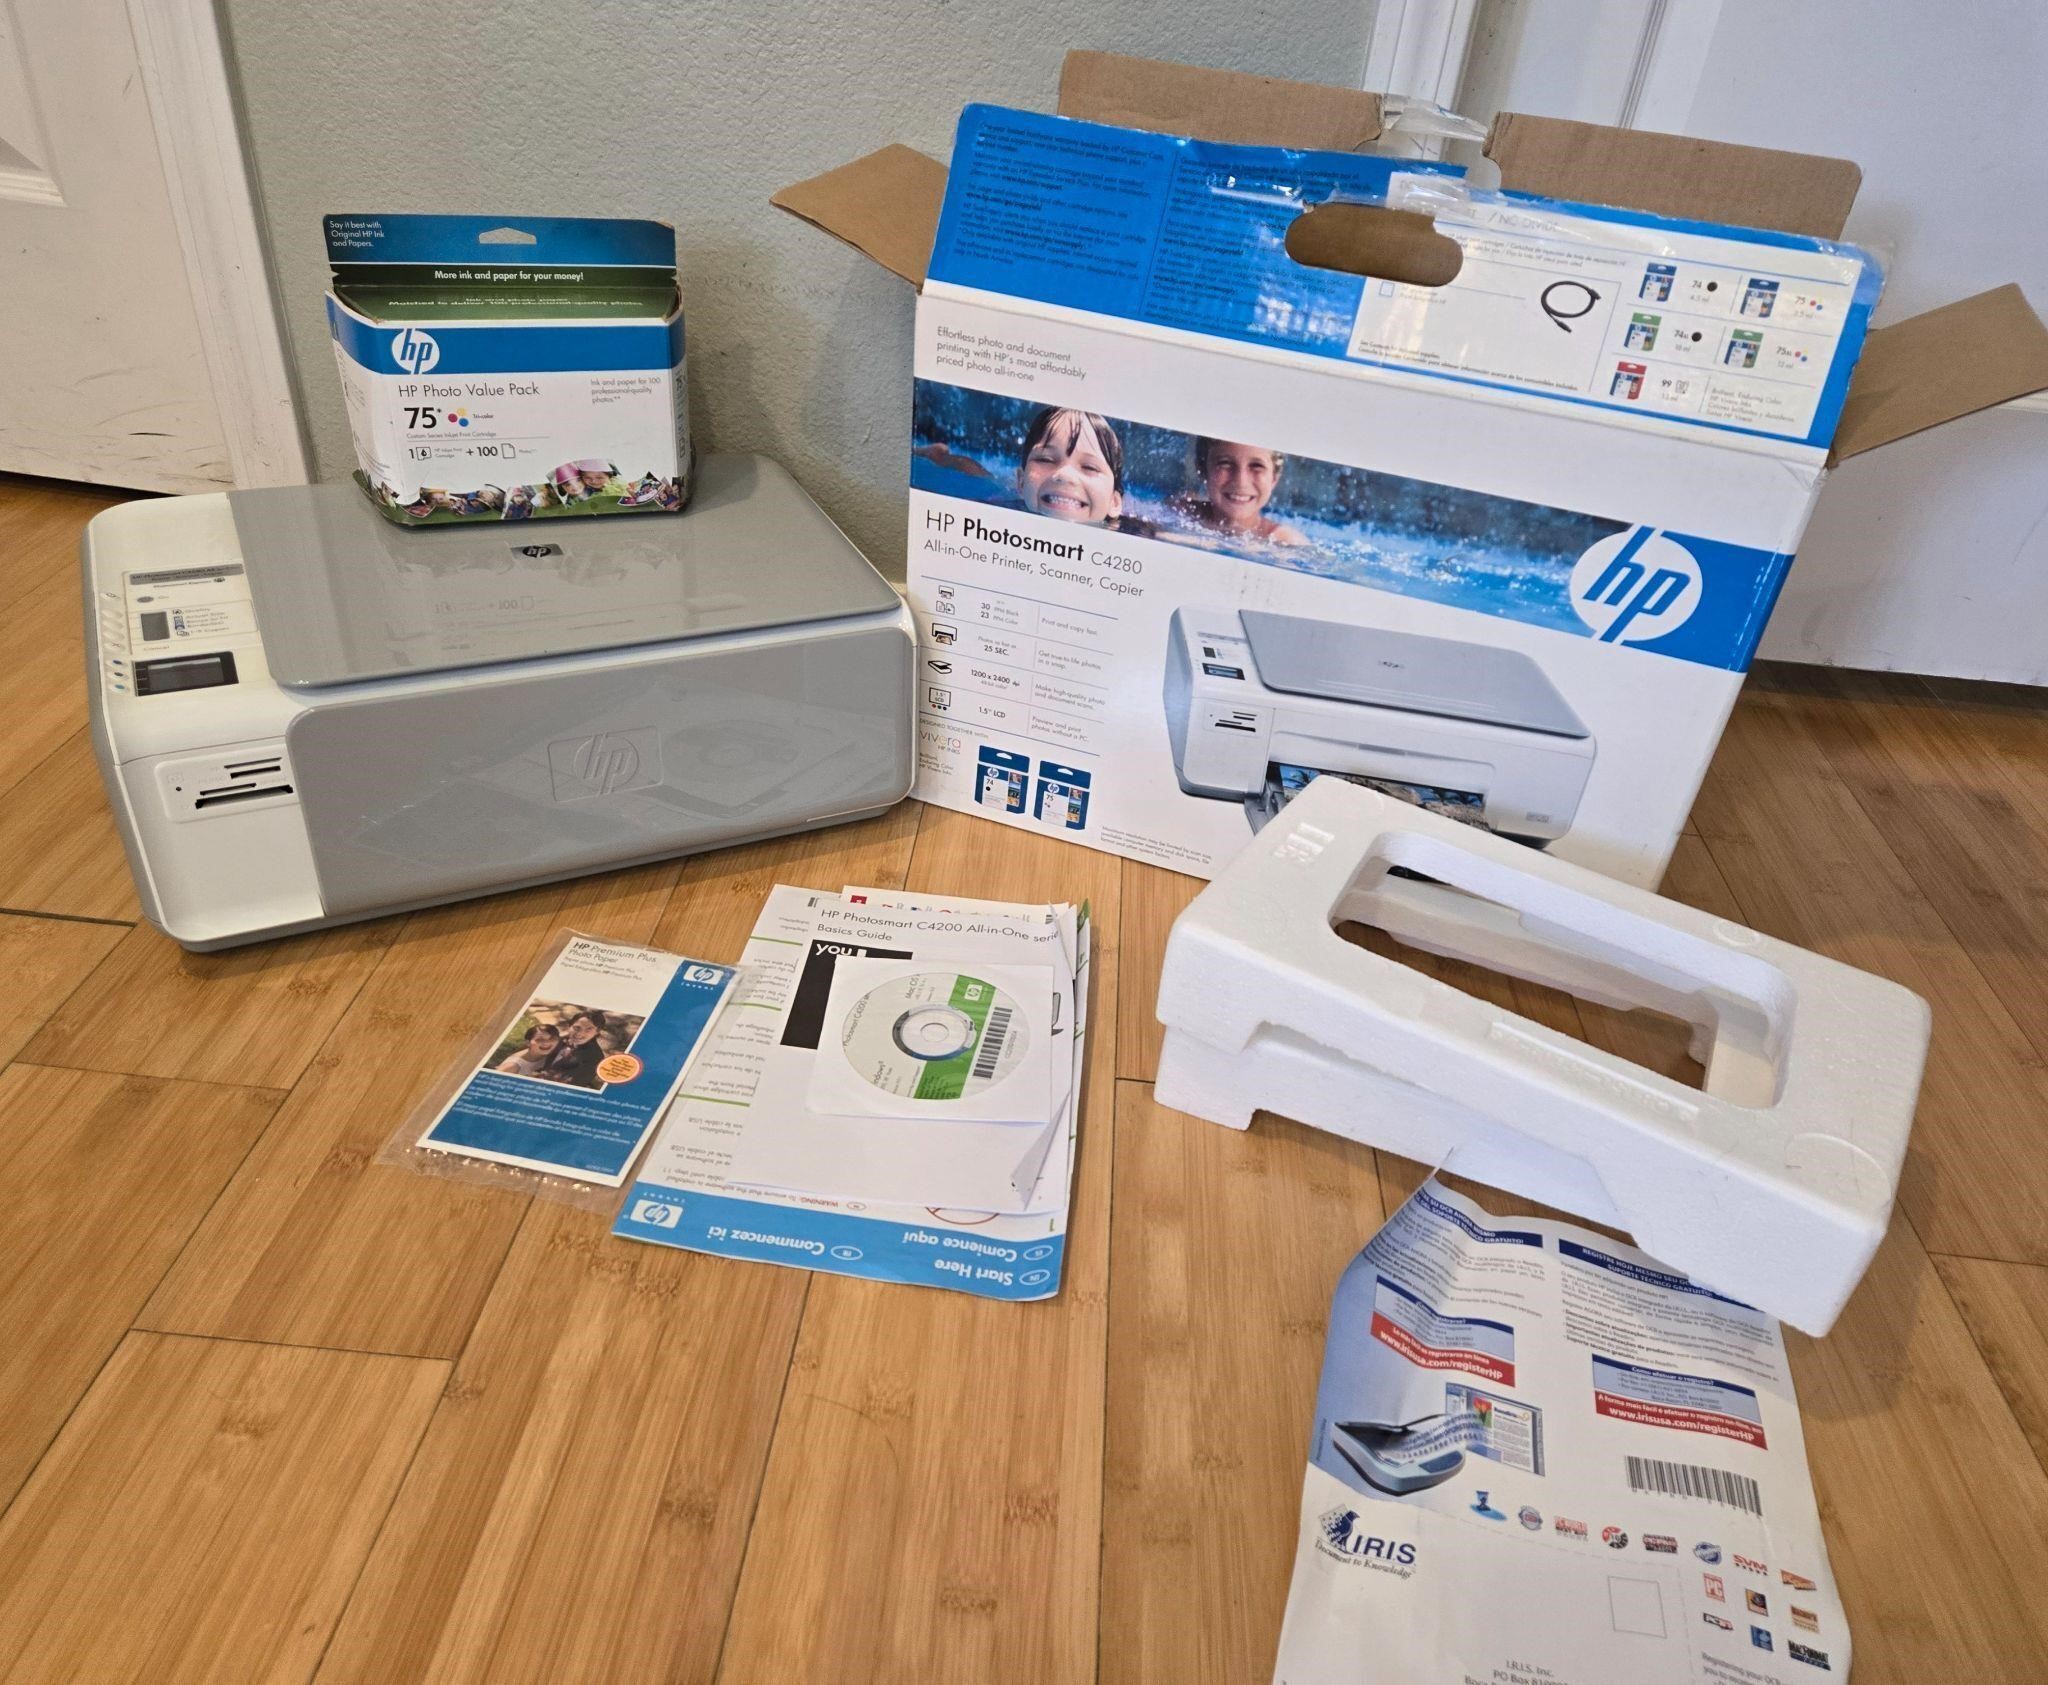 HP Photosmart C4280 Printer